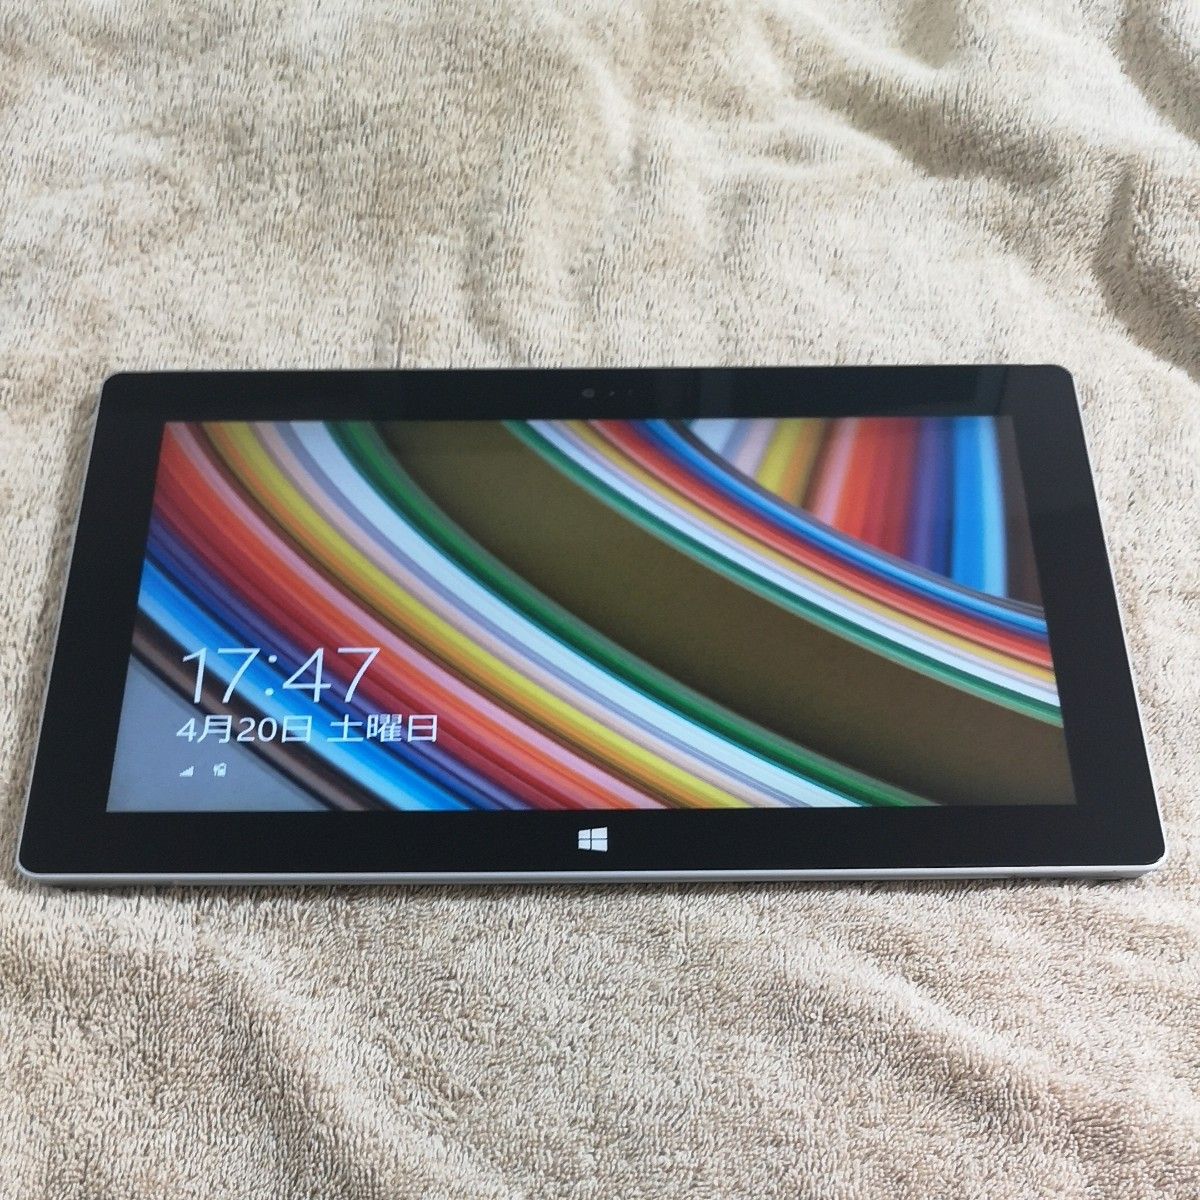 Surface2 RT Windows8.1 32GB Model:1572 sr03 Office 2013 本体のみ